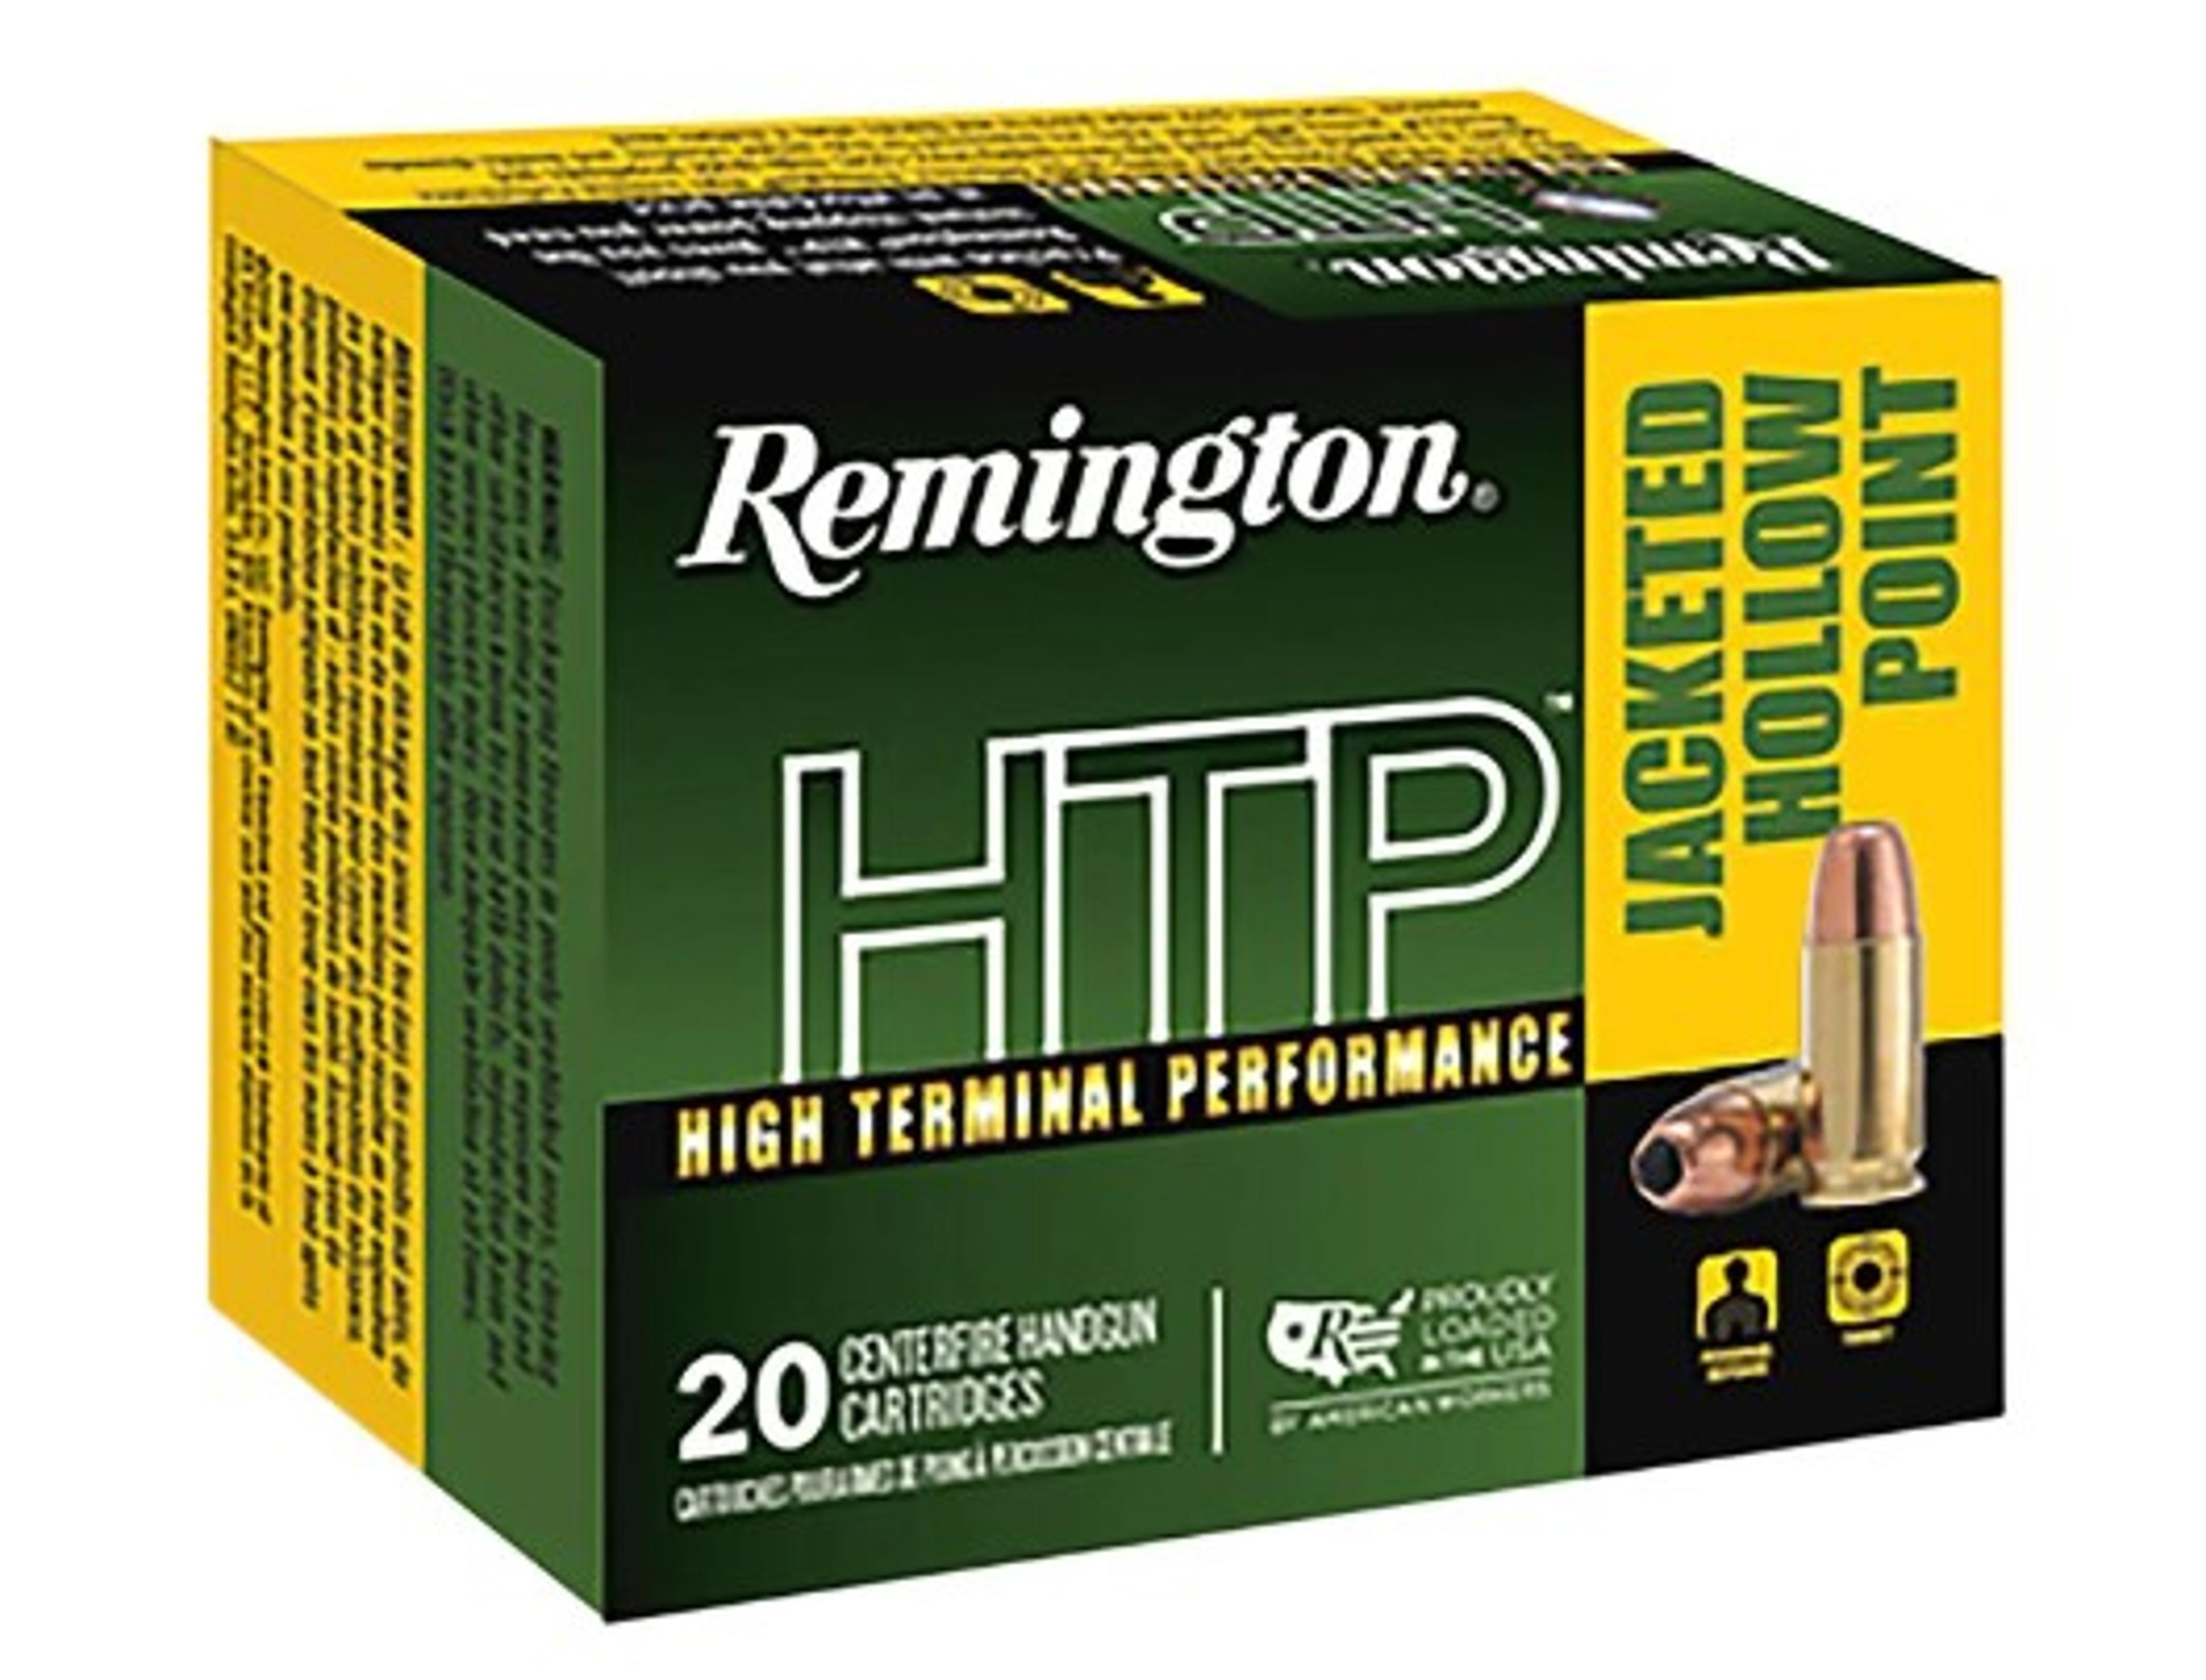  Remington Htp 45lc 230gr